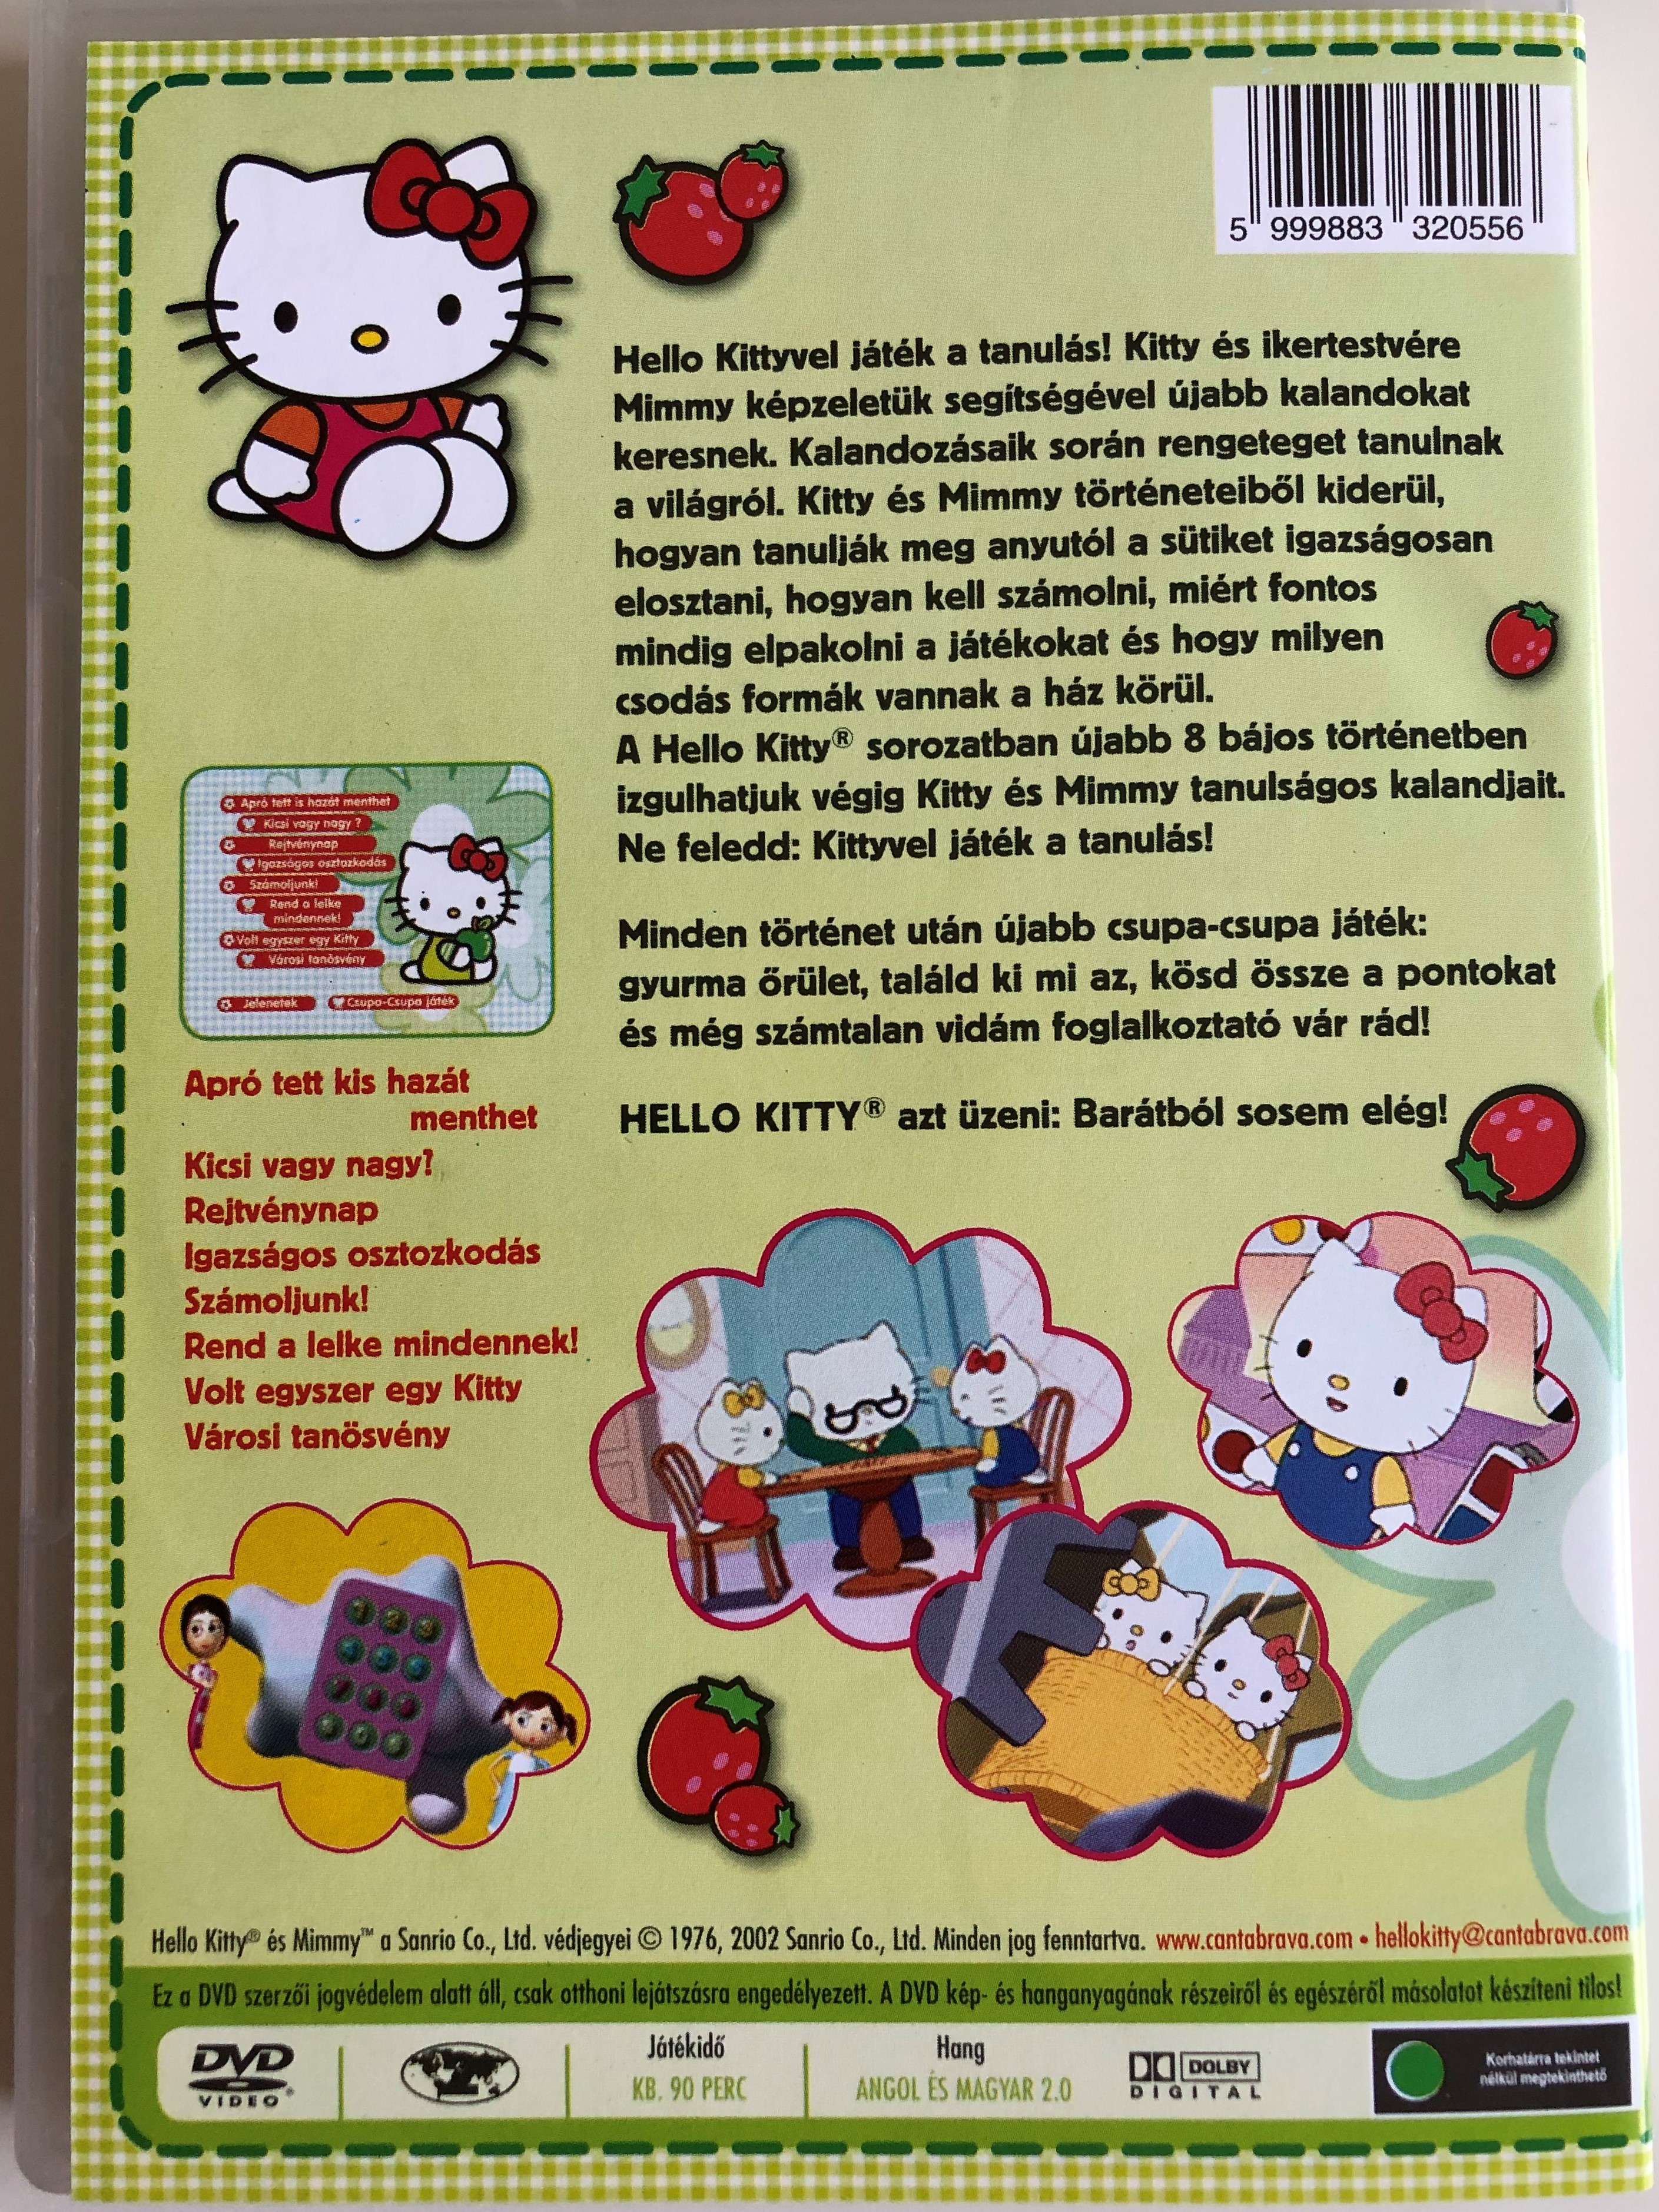 Hello Kitty's Paradise DVD 2002 Kittyvel játék a tanulás! / Directed by  Haruhiko Sakamoto / 8 episodes on disc / Japanese Animated TV Series -  bibleinmylanguage